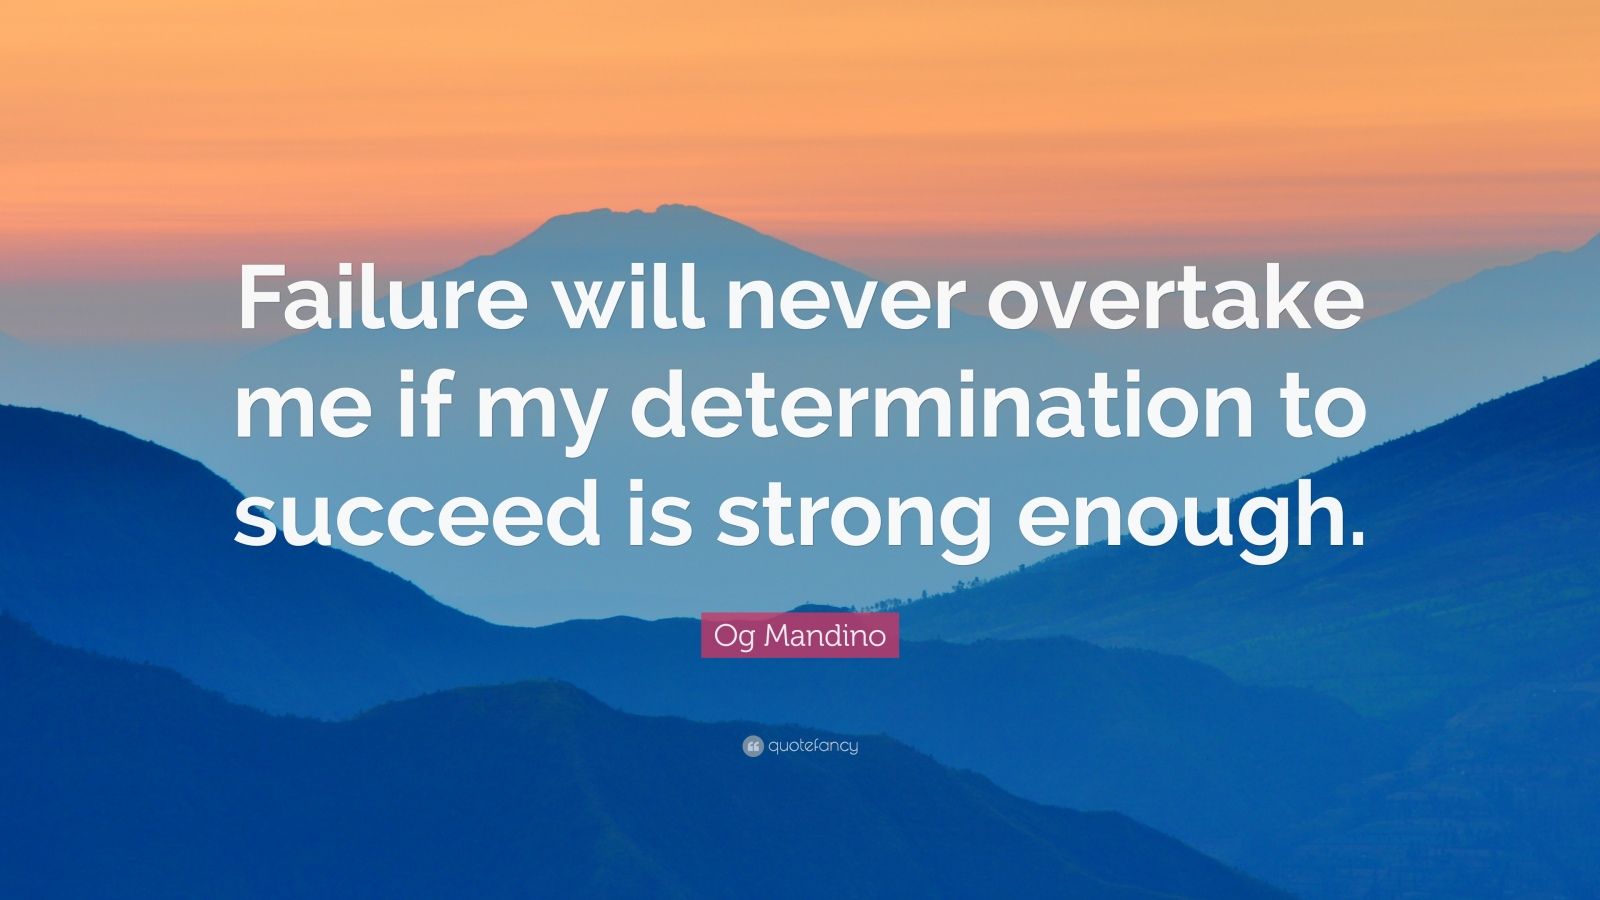 Og Mandino Quote: “Failure will never overtake me if my determination ...